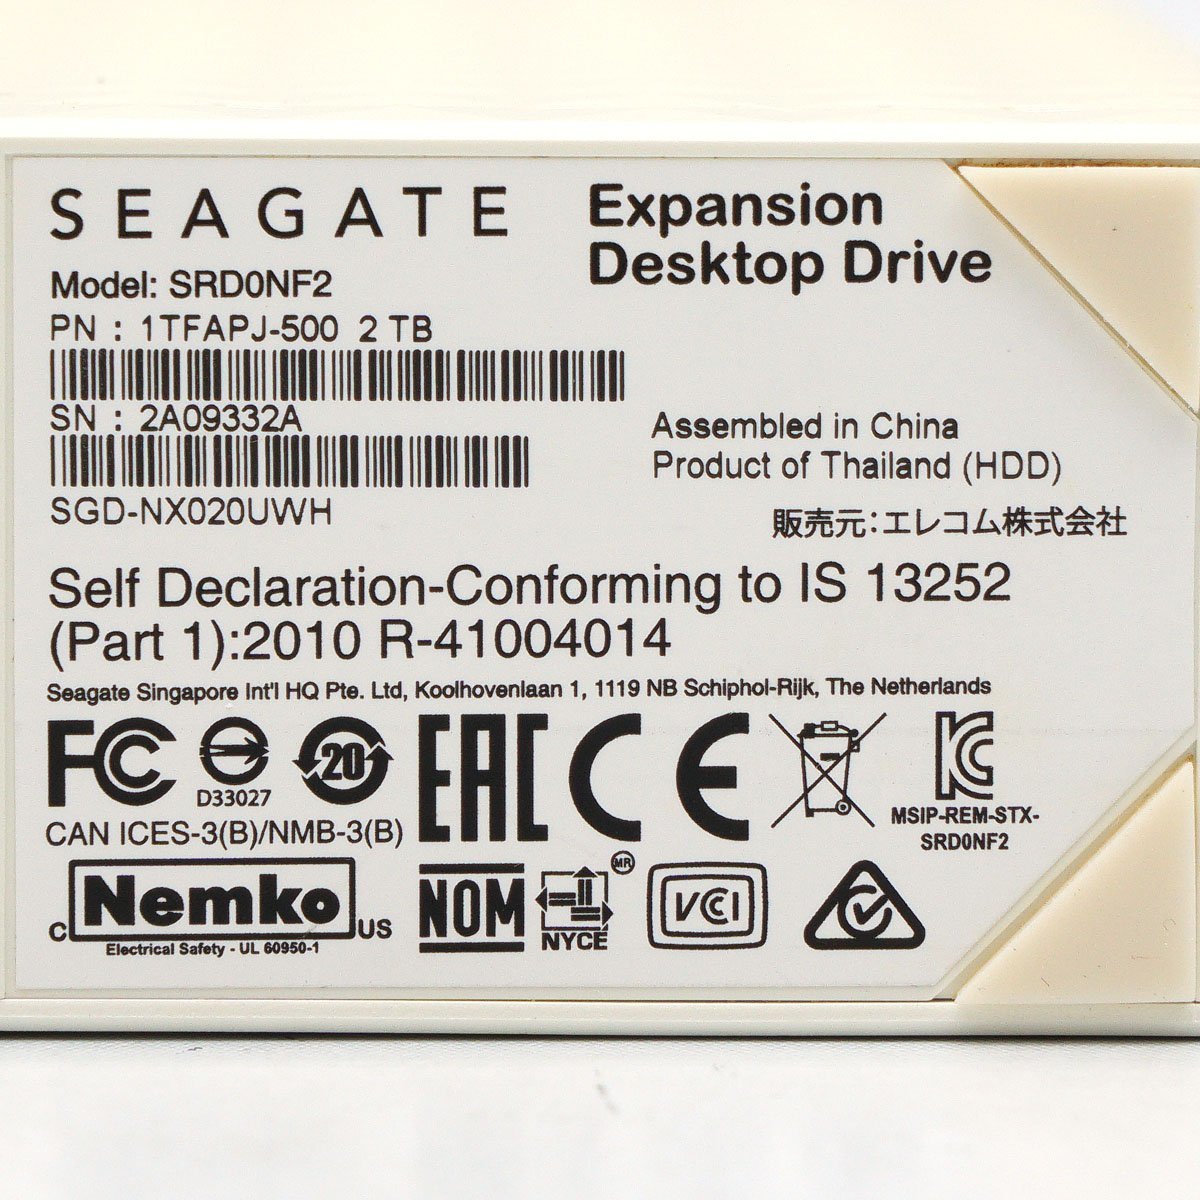 SEAGATE ELECOM Expansion 2TB SGD-NX020UWH USB3.0対応外付けZHDD ホワイト [H800551]